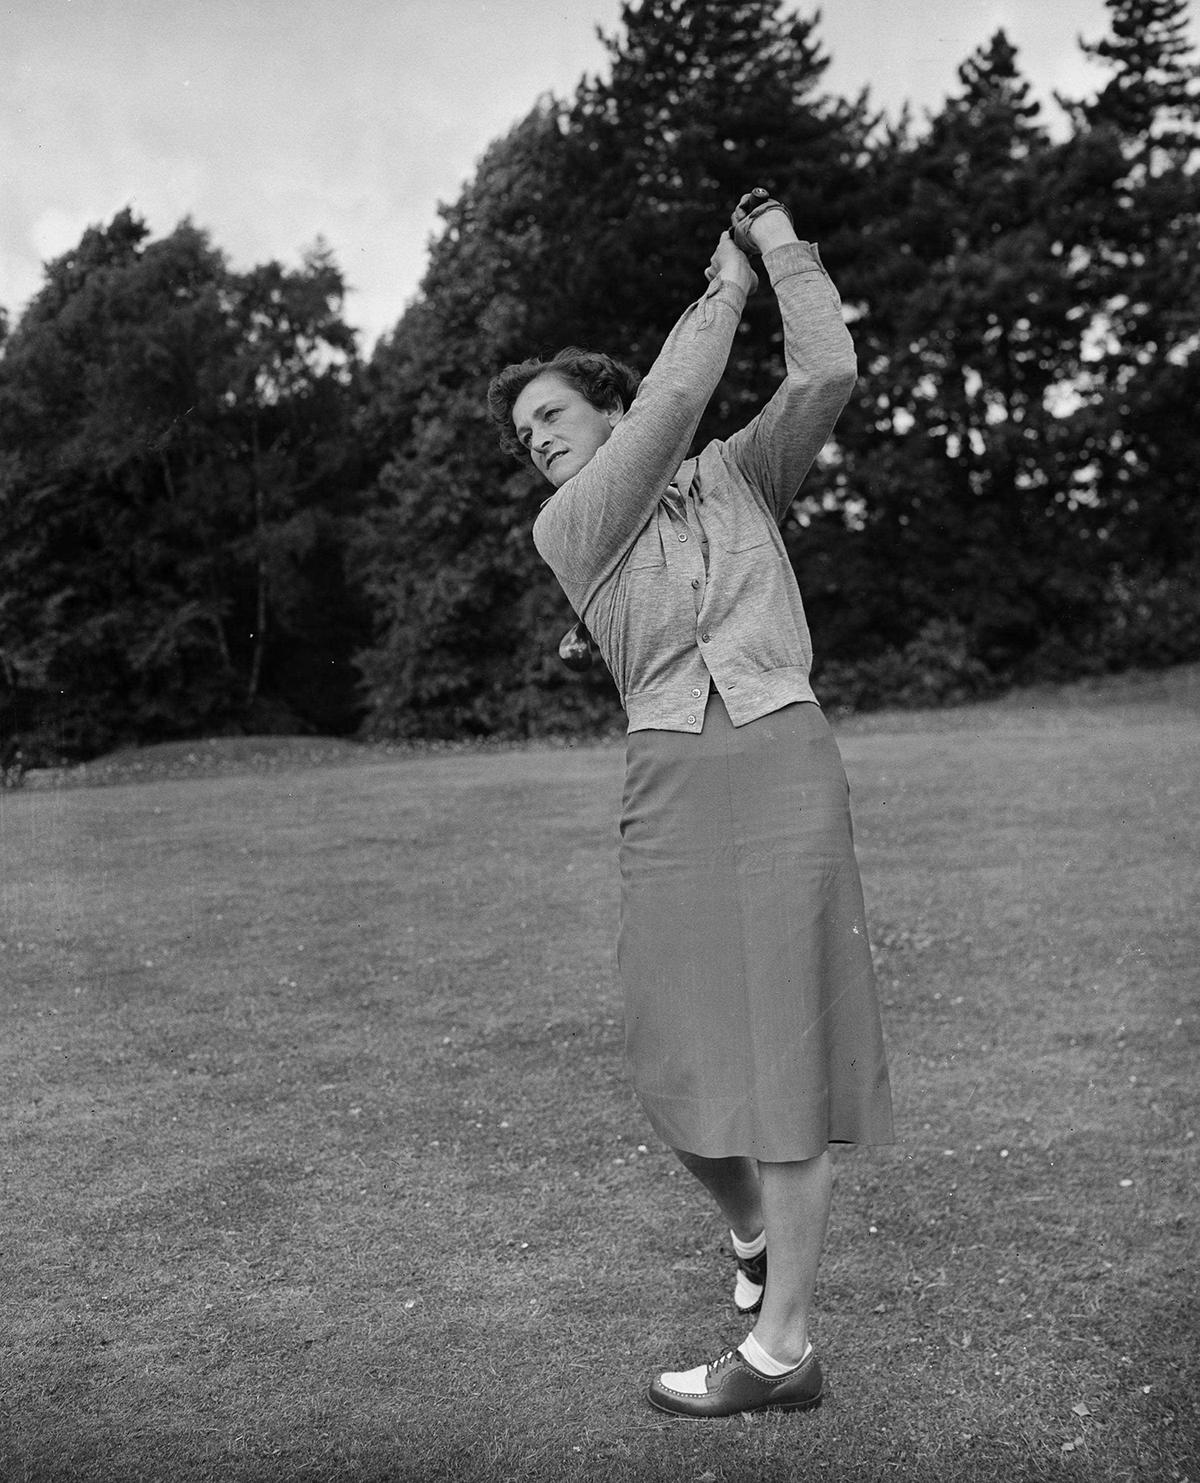 Golf champion Babe Zaharias in action, 1951. (Allsport/Getty Images)